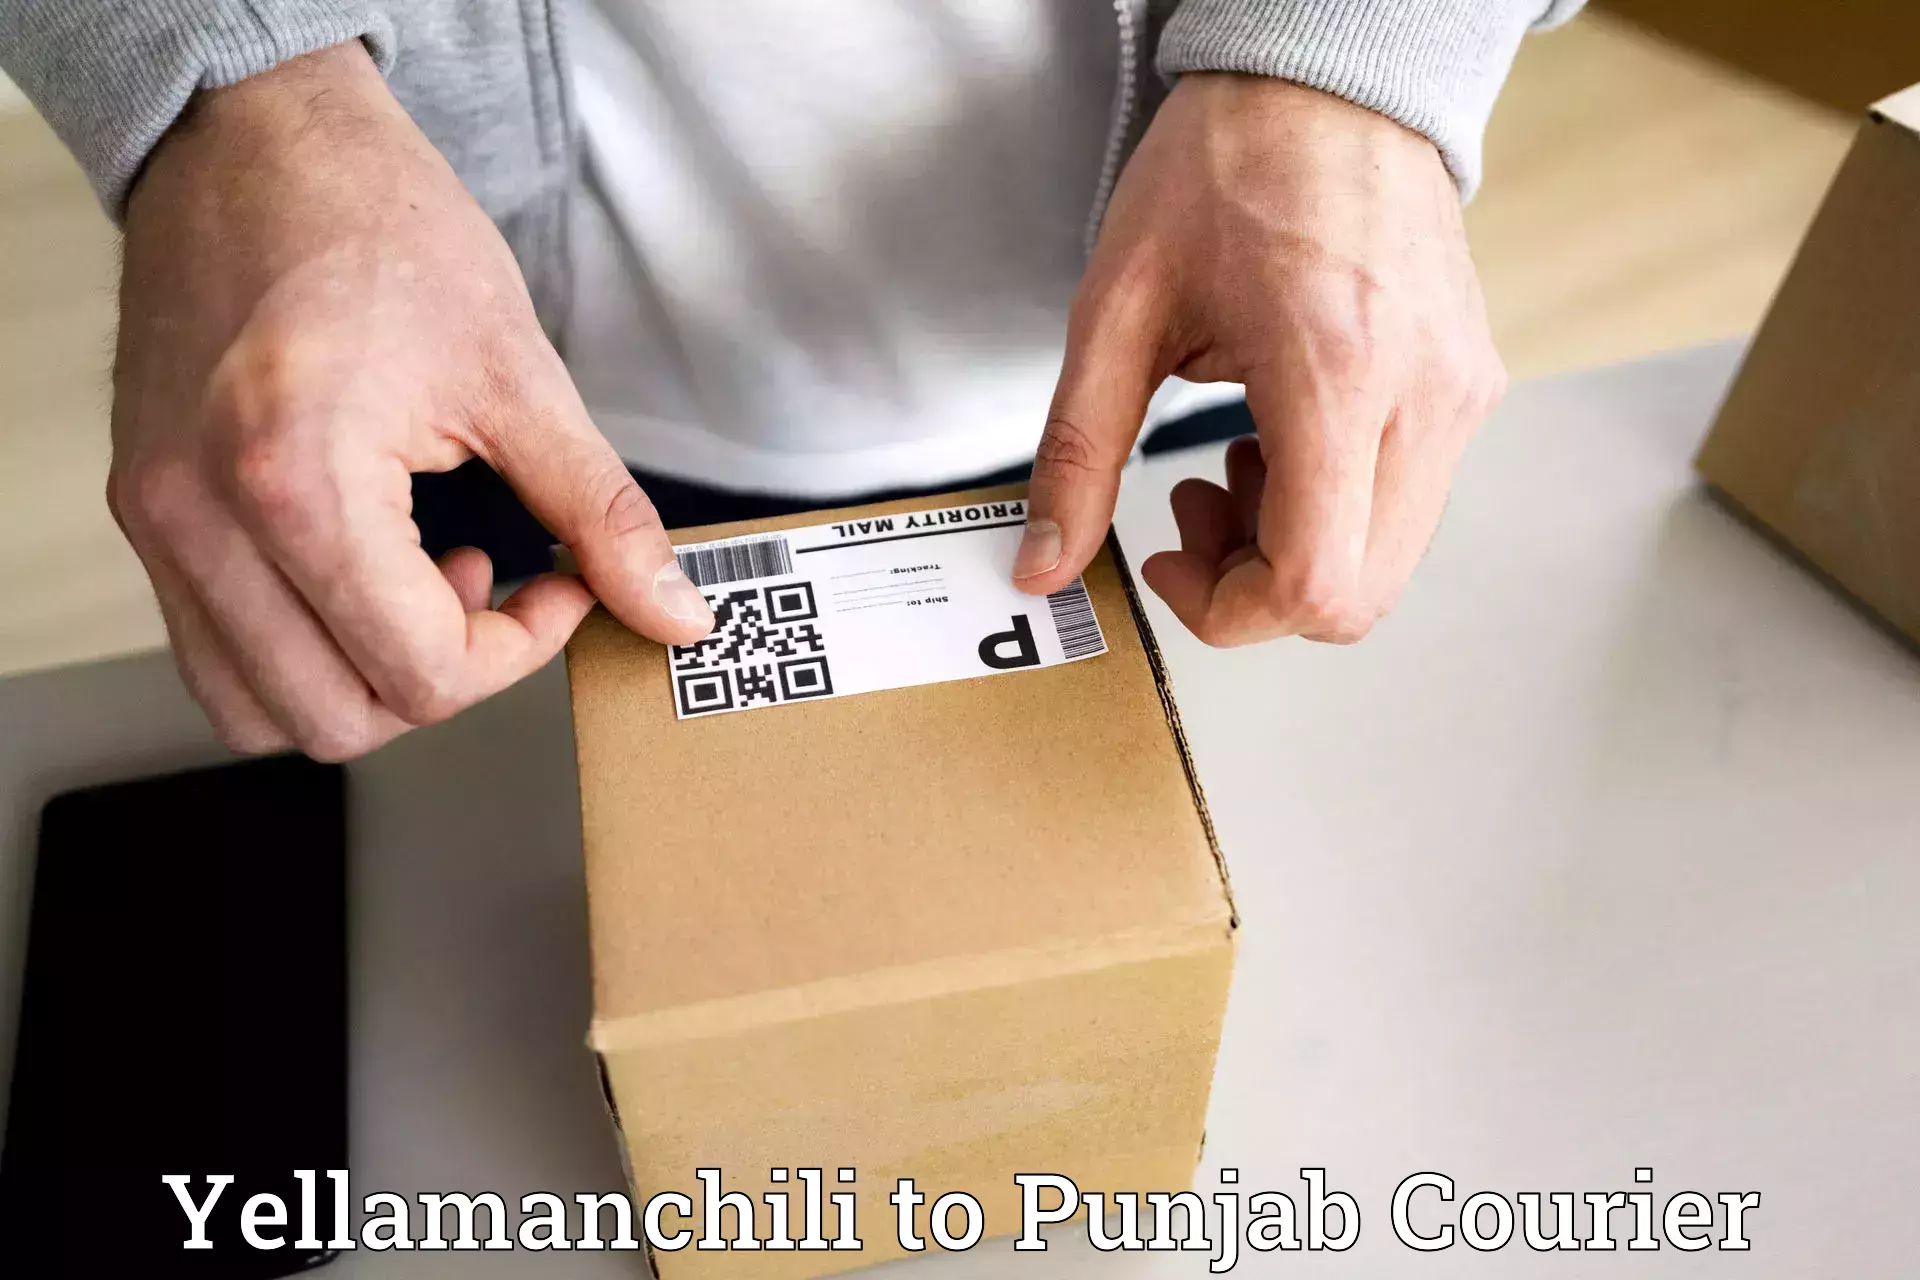 Reliable delivery network Yellamanchili to Punjab